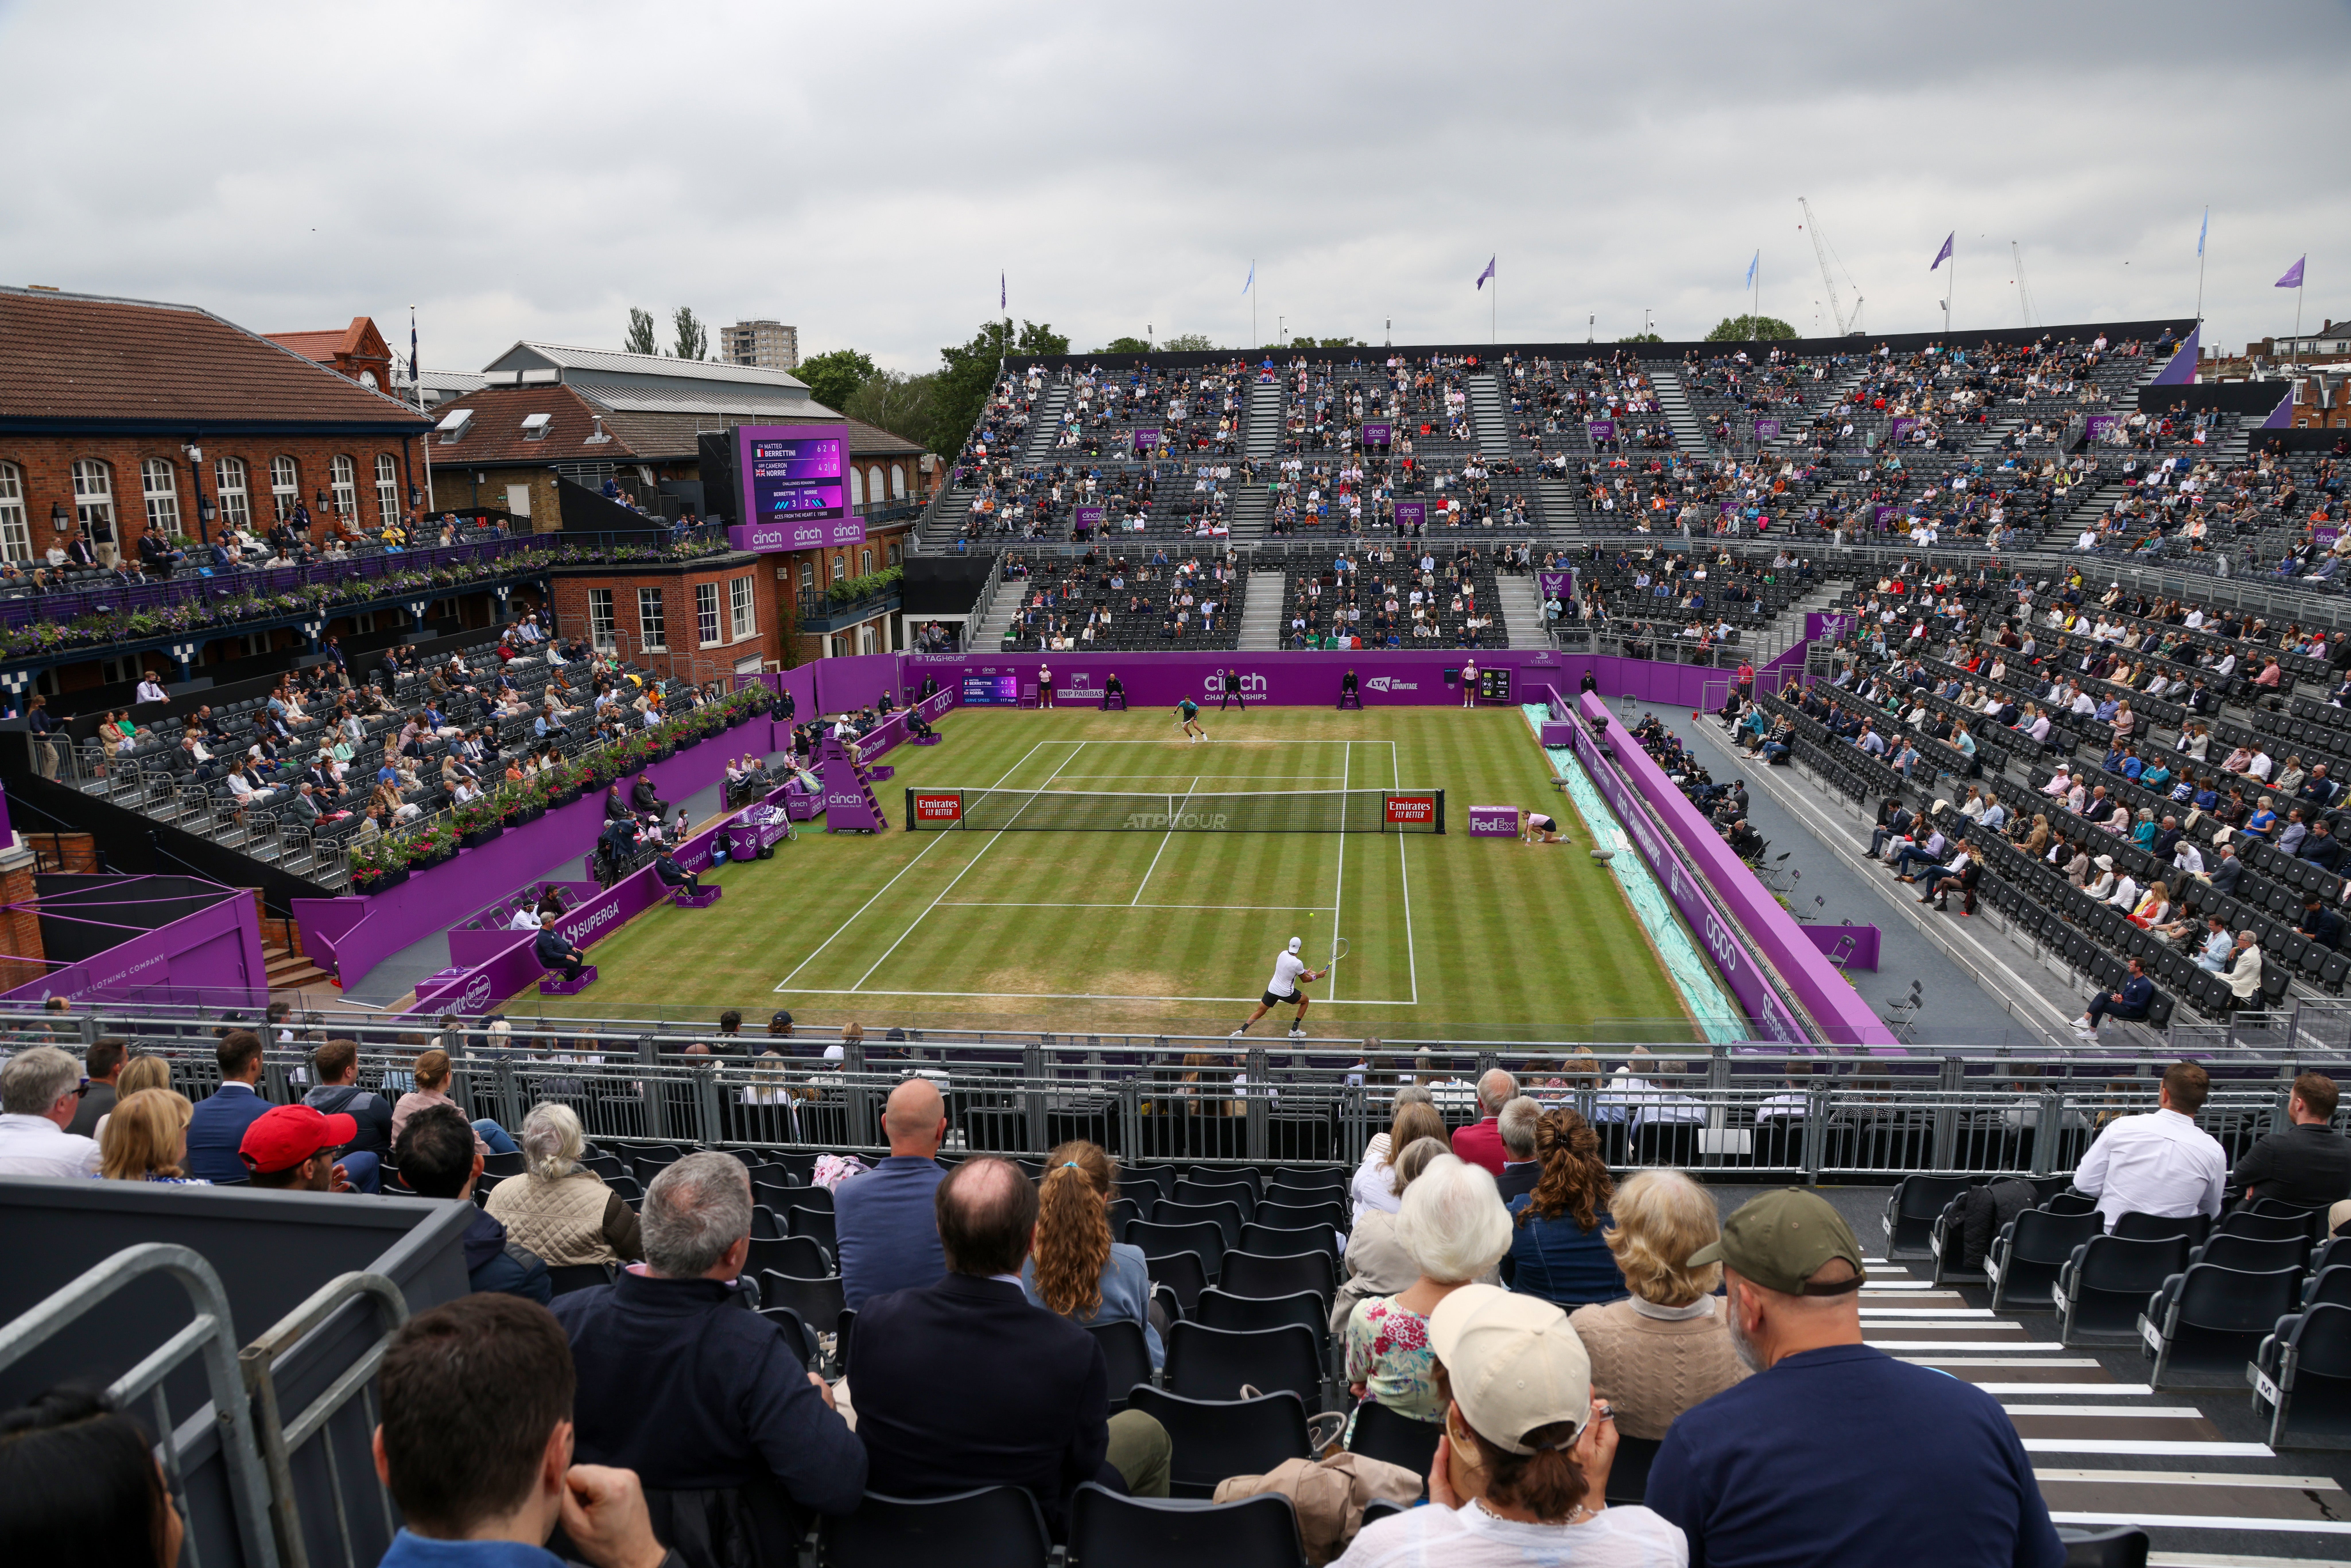 Queen’s will host a women’s tennis event from 2025